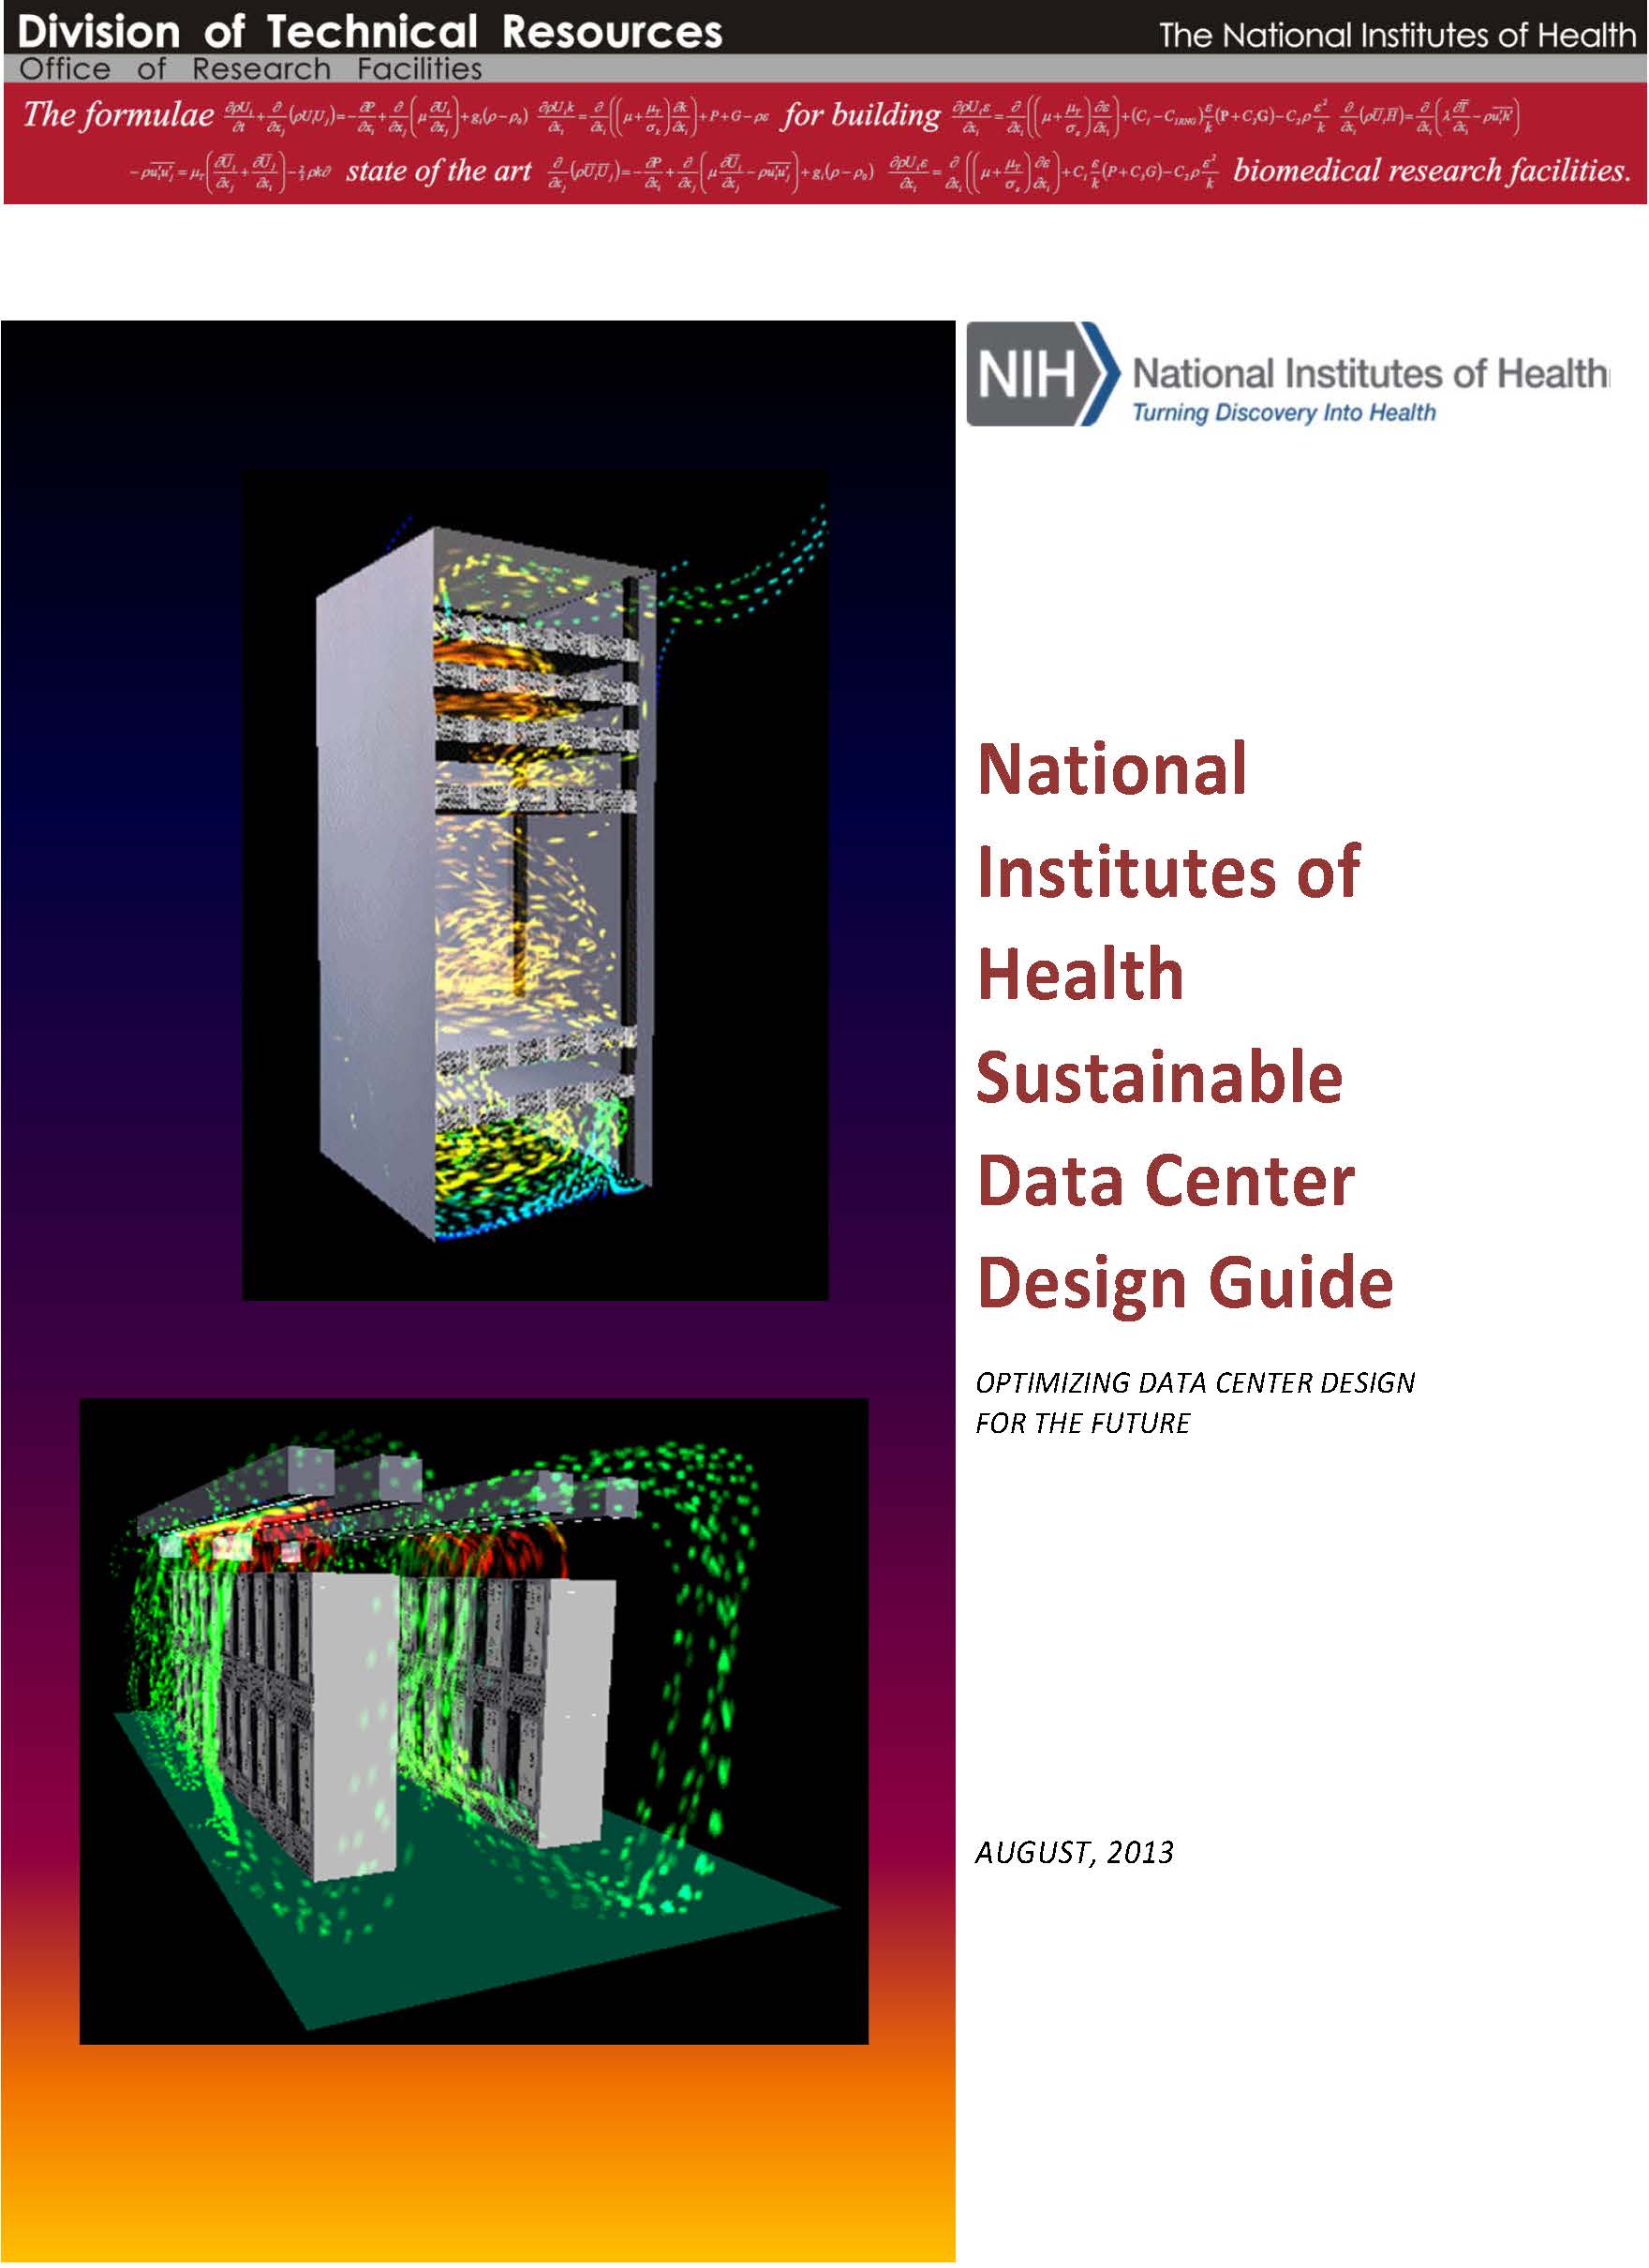 nih Sustainable Data Center Design Guide